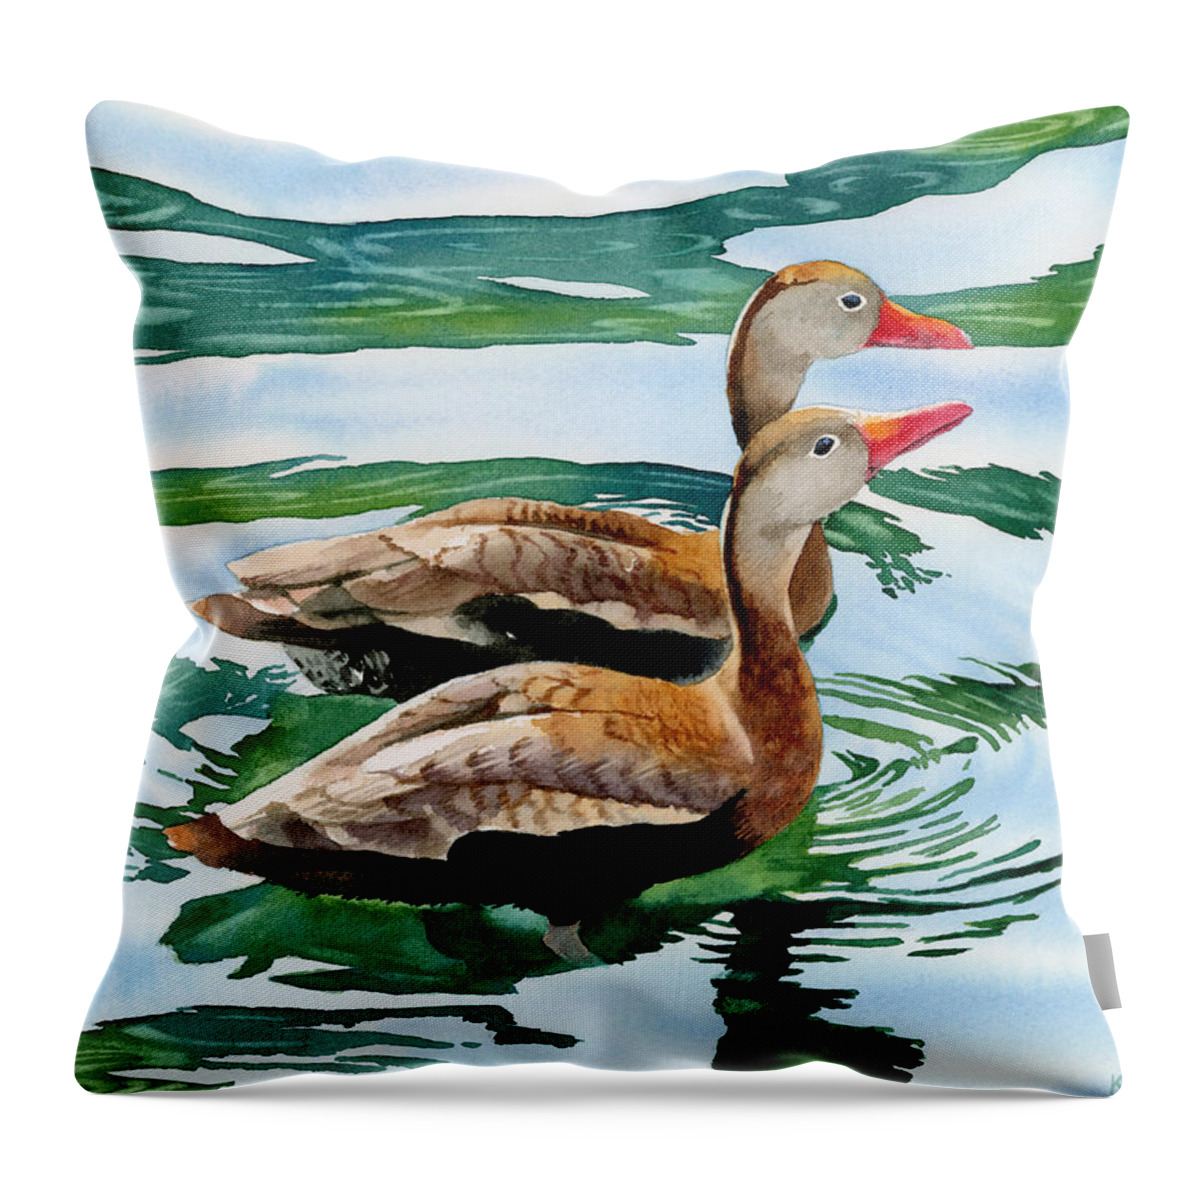 Esperoart Throw Pillow featuring the painting Ducks by Espero Art